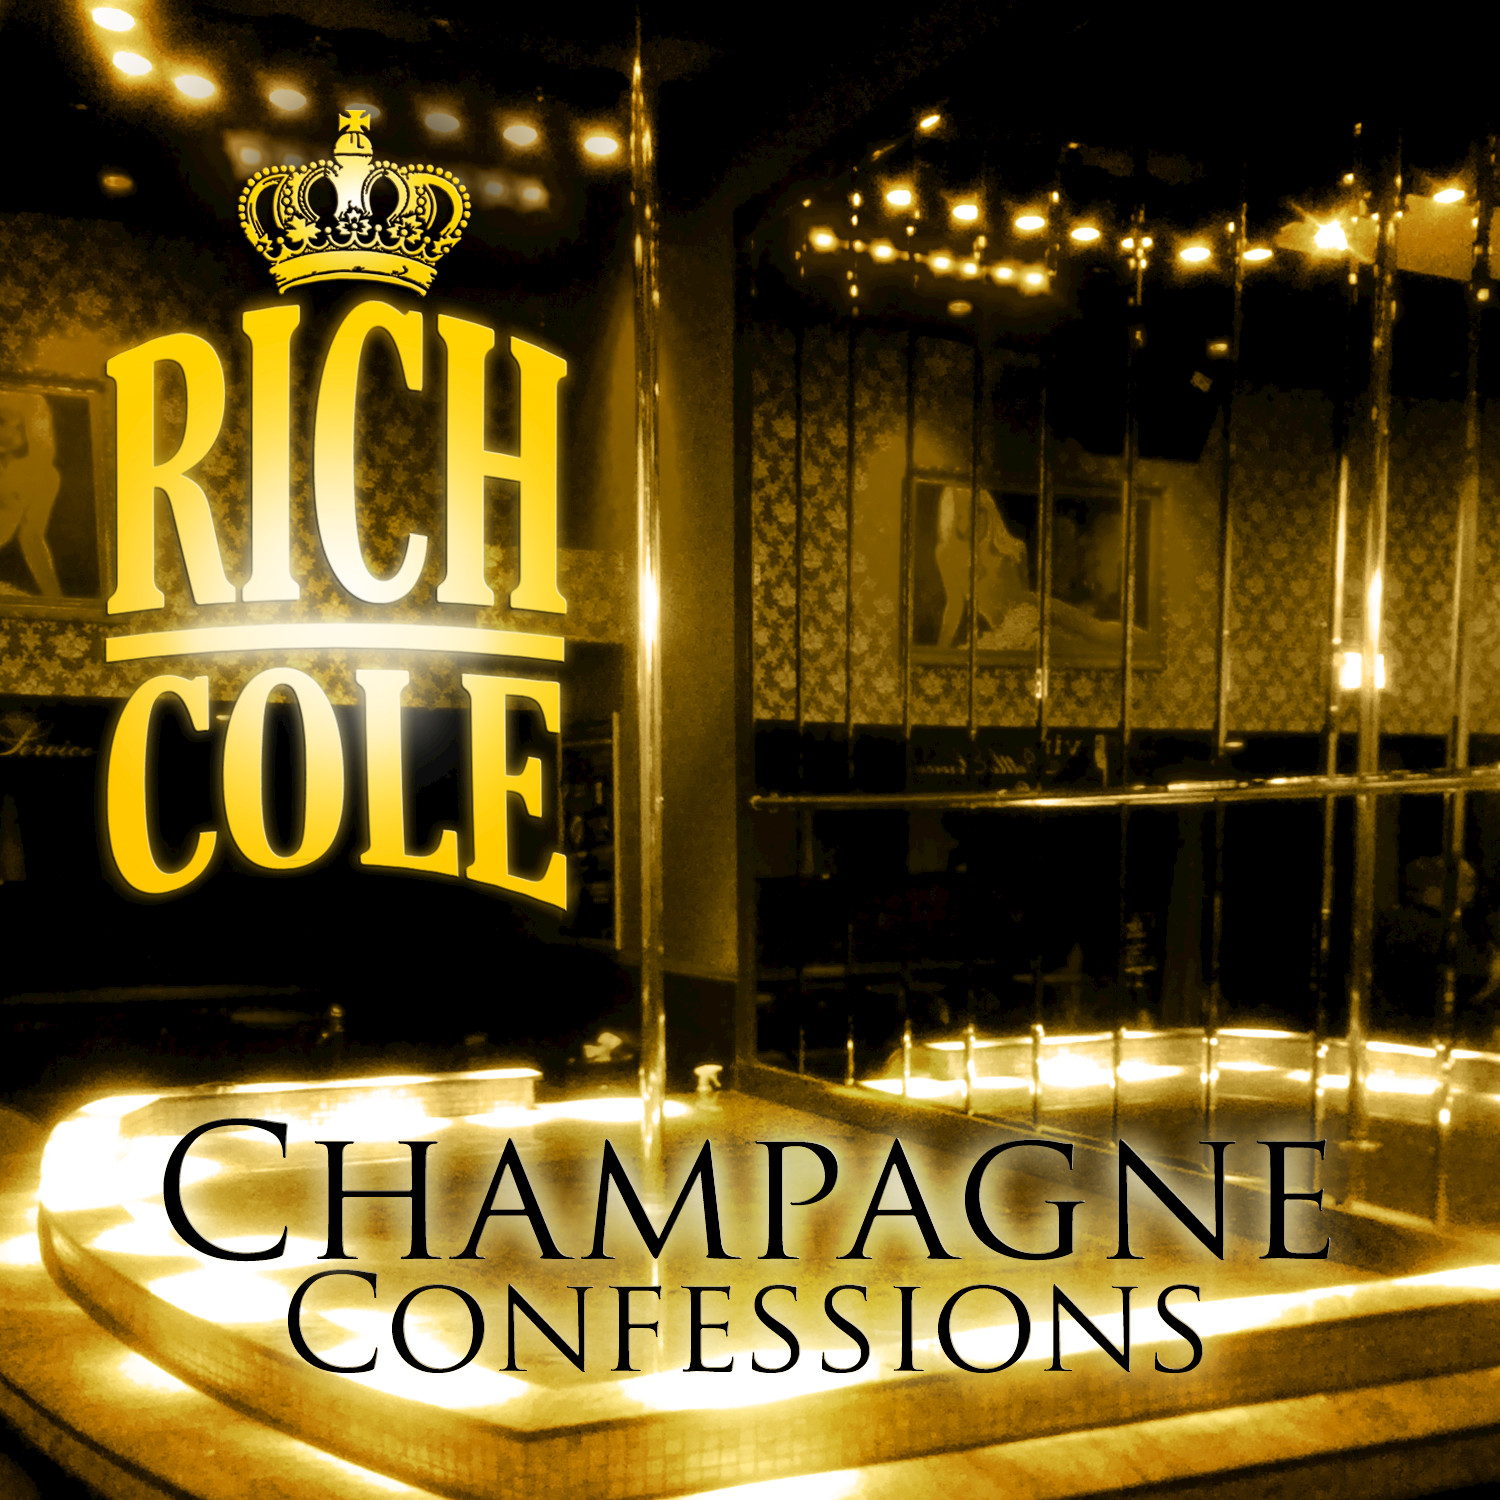 Champagne Confessions